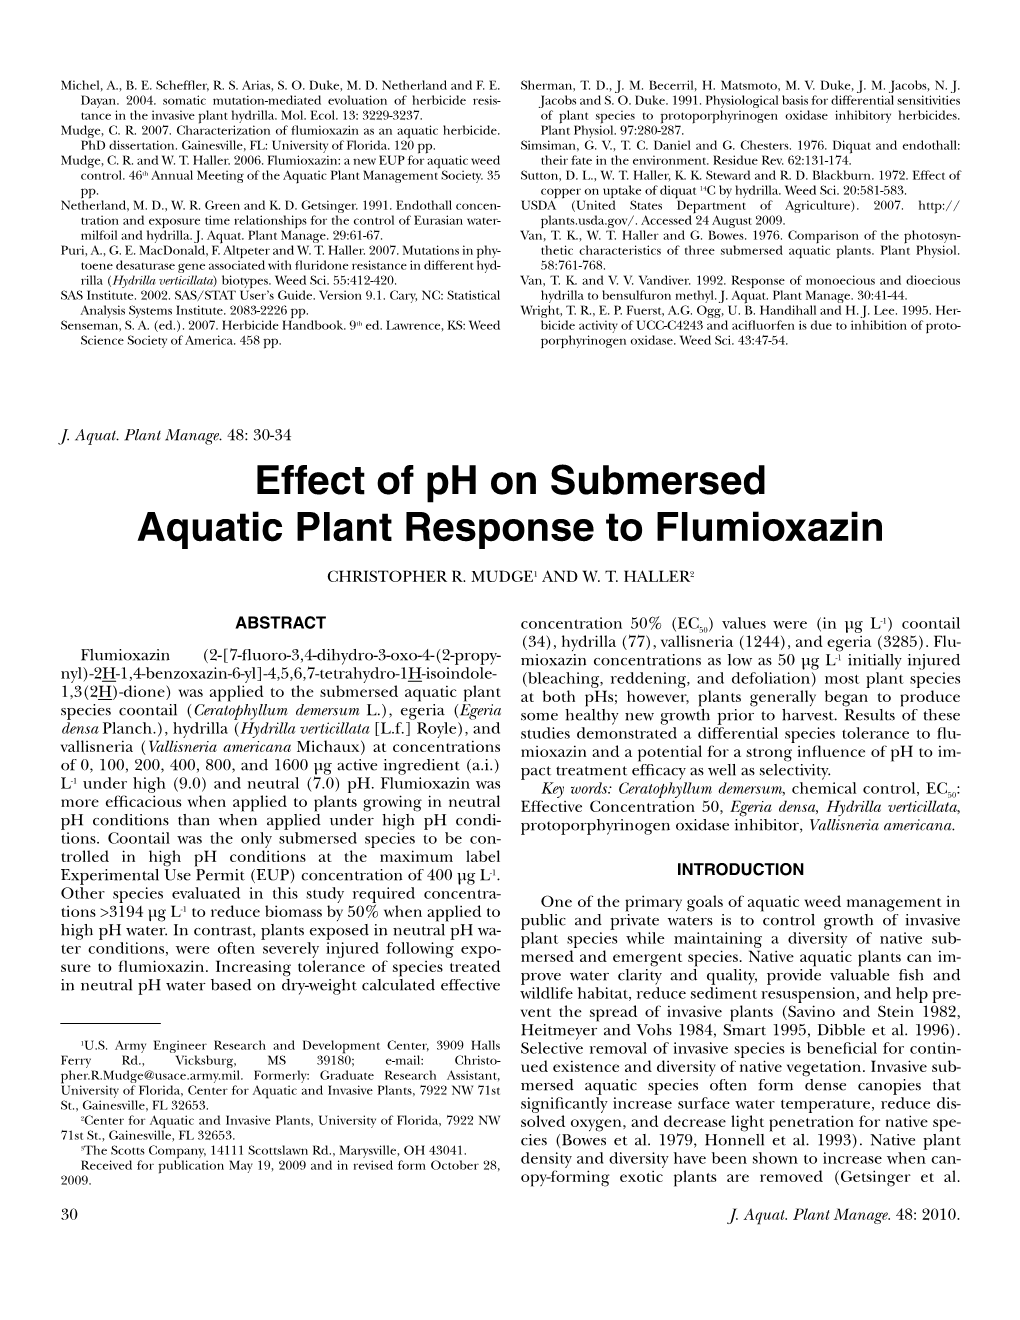 Effect of Ph on Submersed Aquatic Plant Response to Flumioxazin